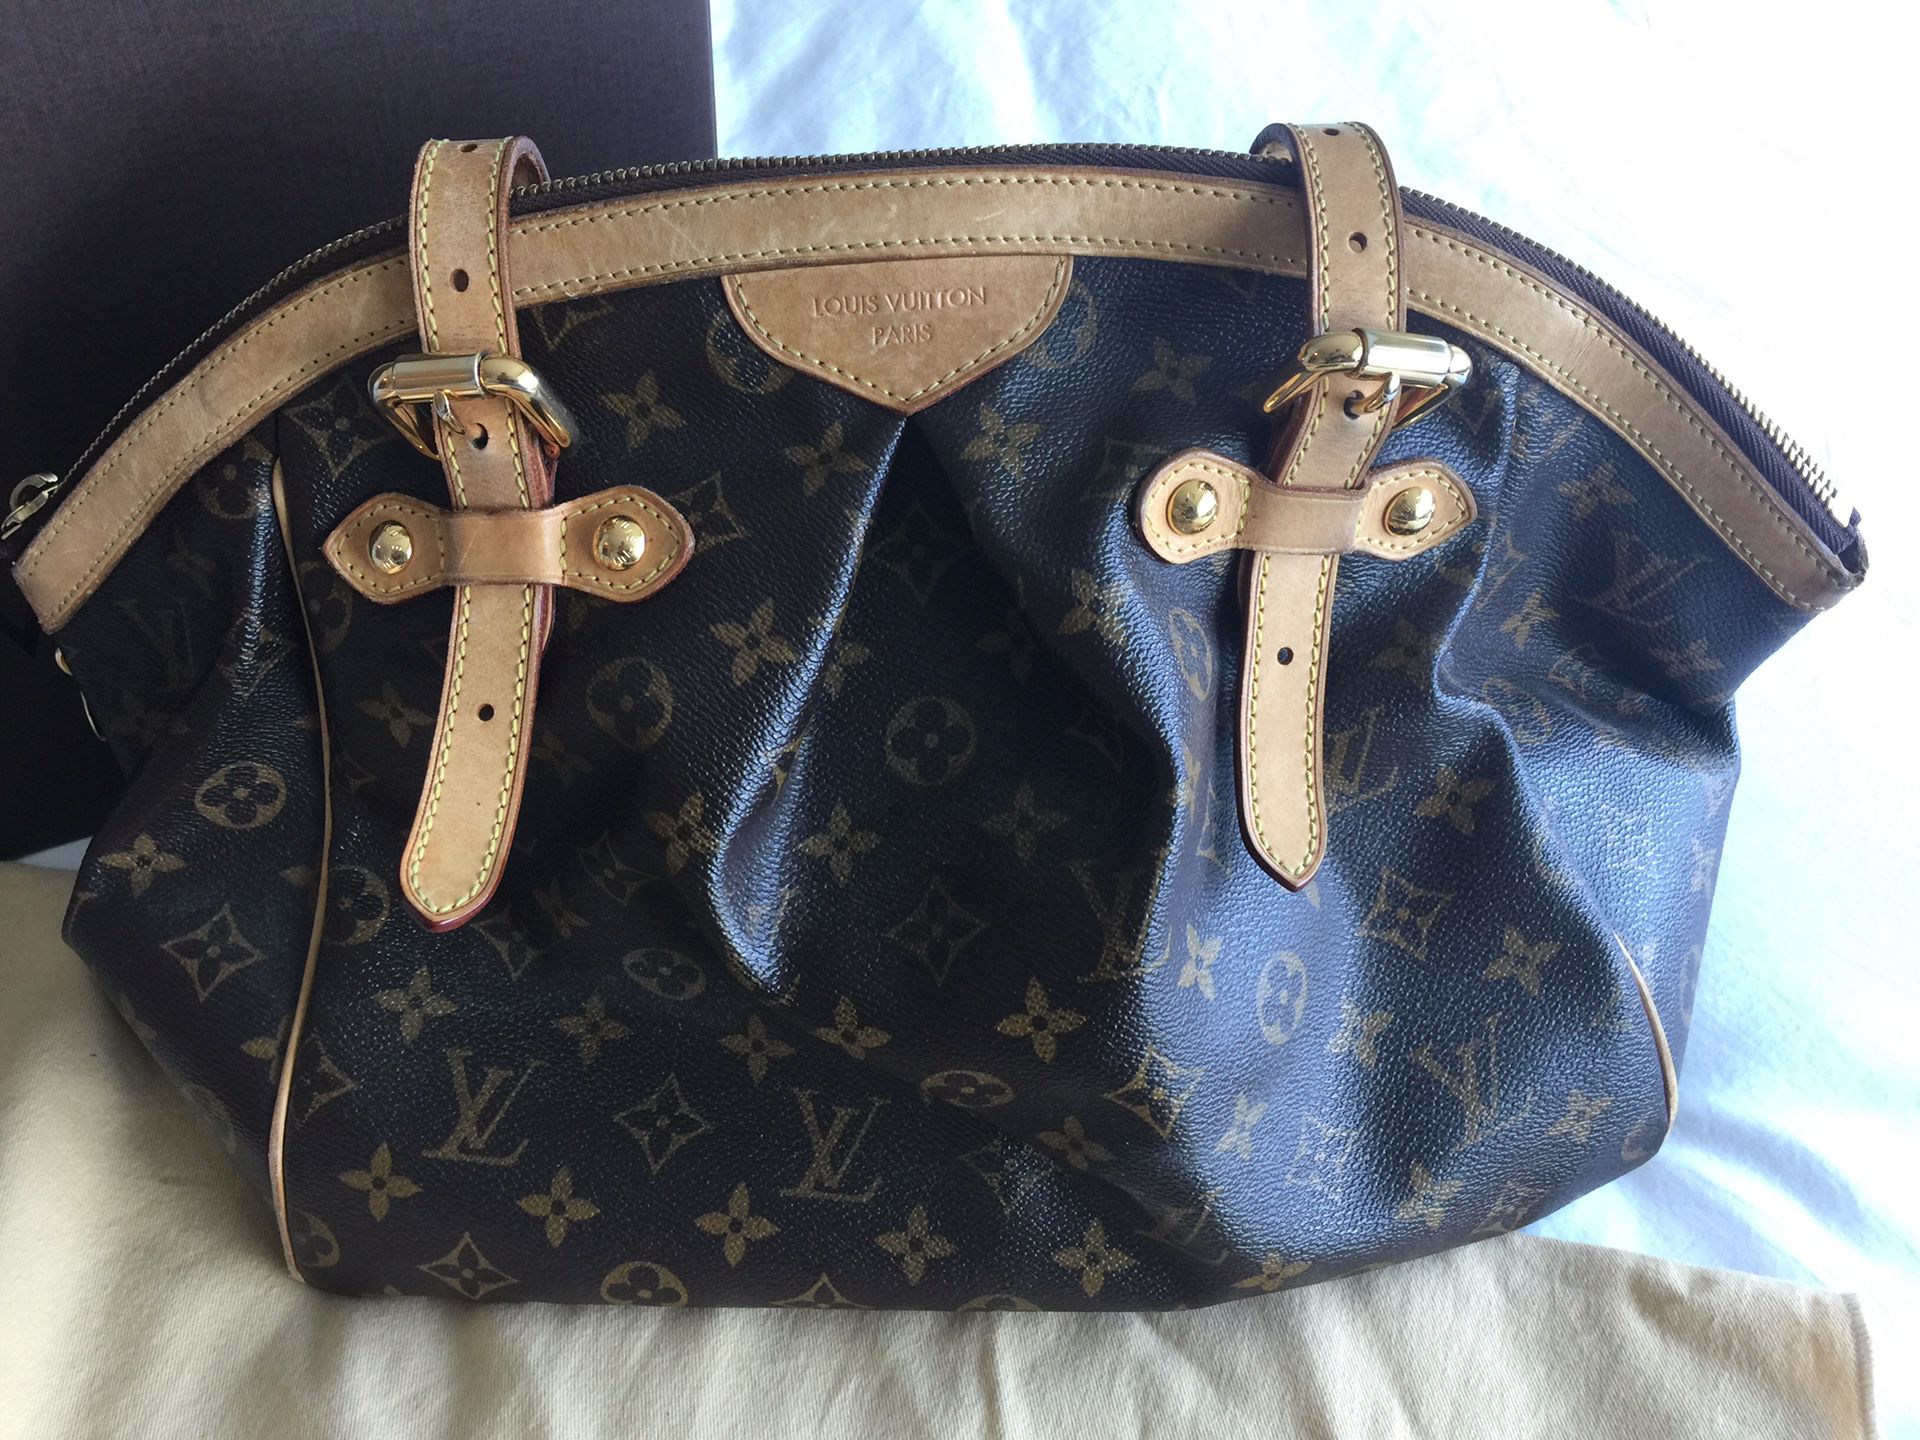 Louis Vuitton Tivoli PM bag- no longer make this